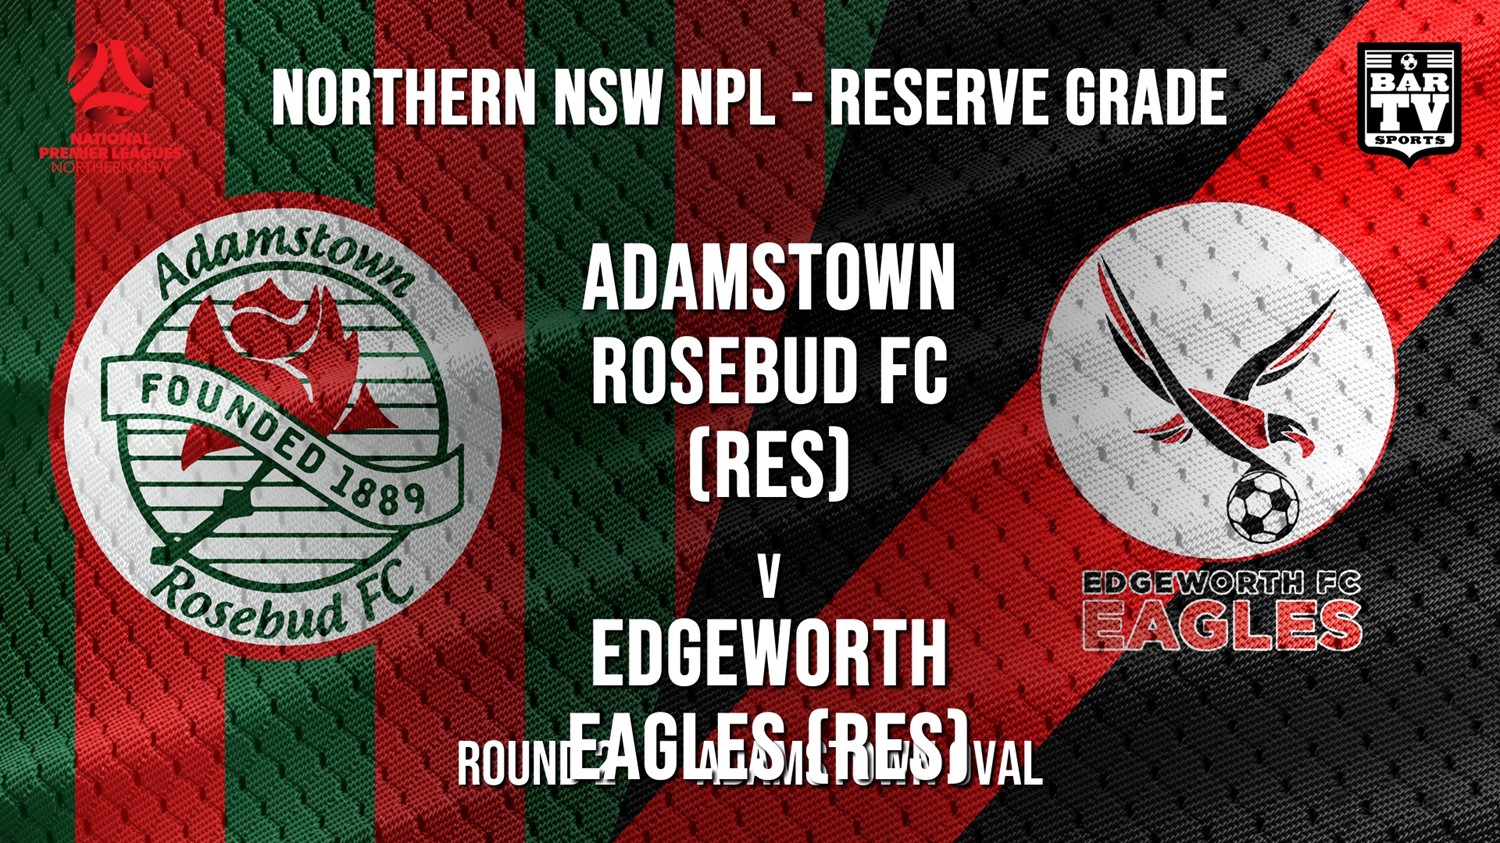 NPL NNSW RES Round 2 - Adamstown Rosebud FC (Res) v Edgeworth Eagles (Res) Minigame Slate Image